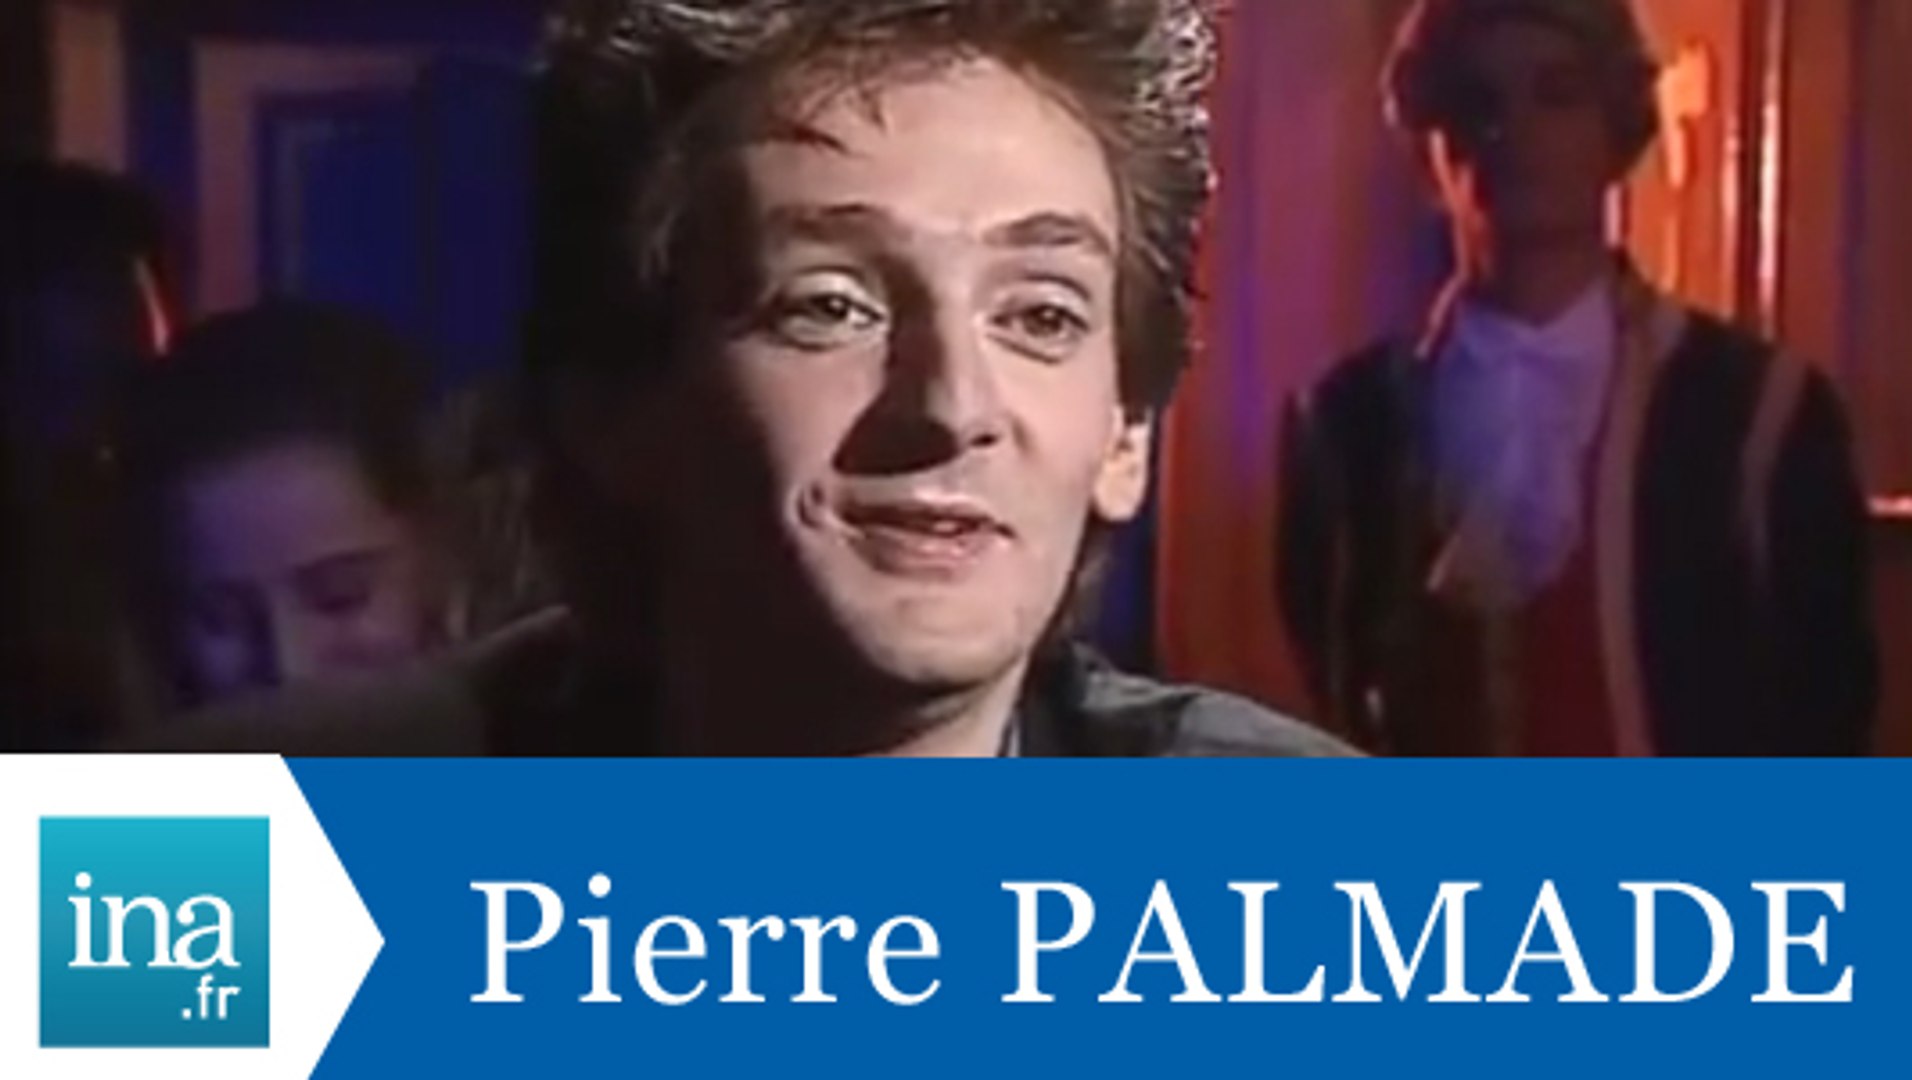 Interview jumeaux : Pierre Palmade face à Madame Palmade - Archive INA -  Vidéo Dailymotion